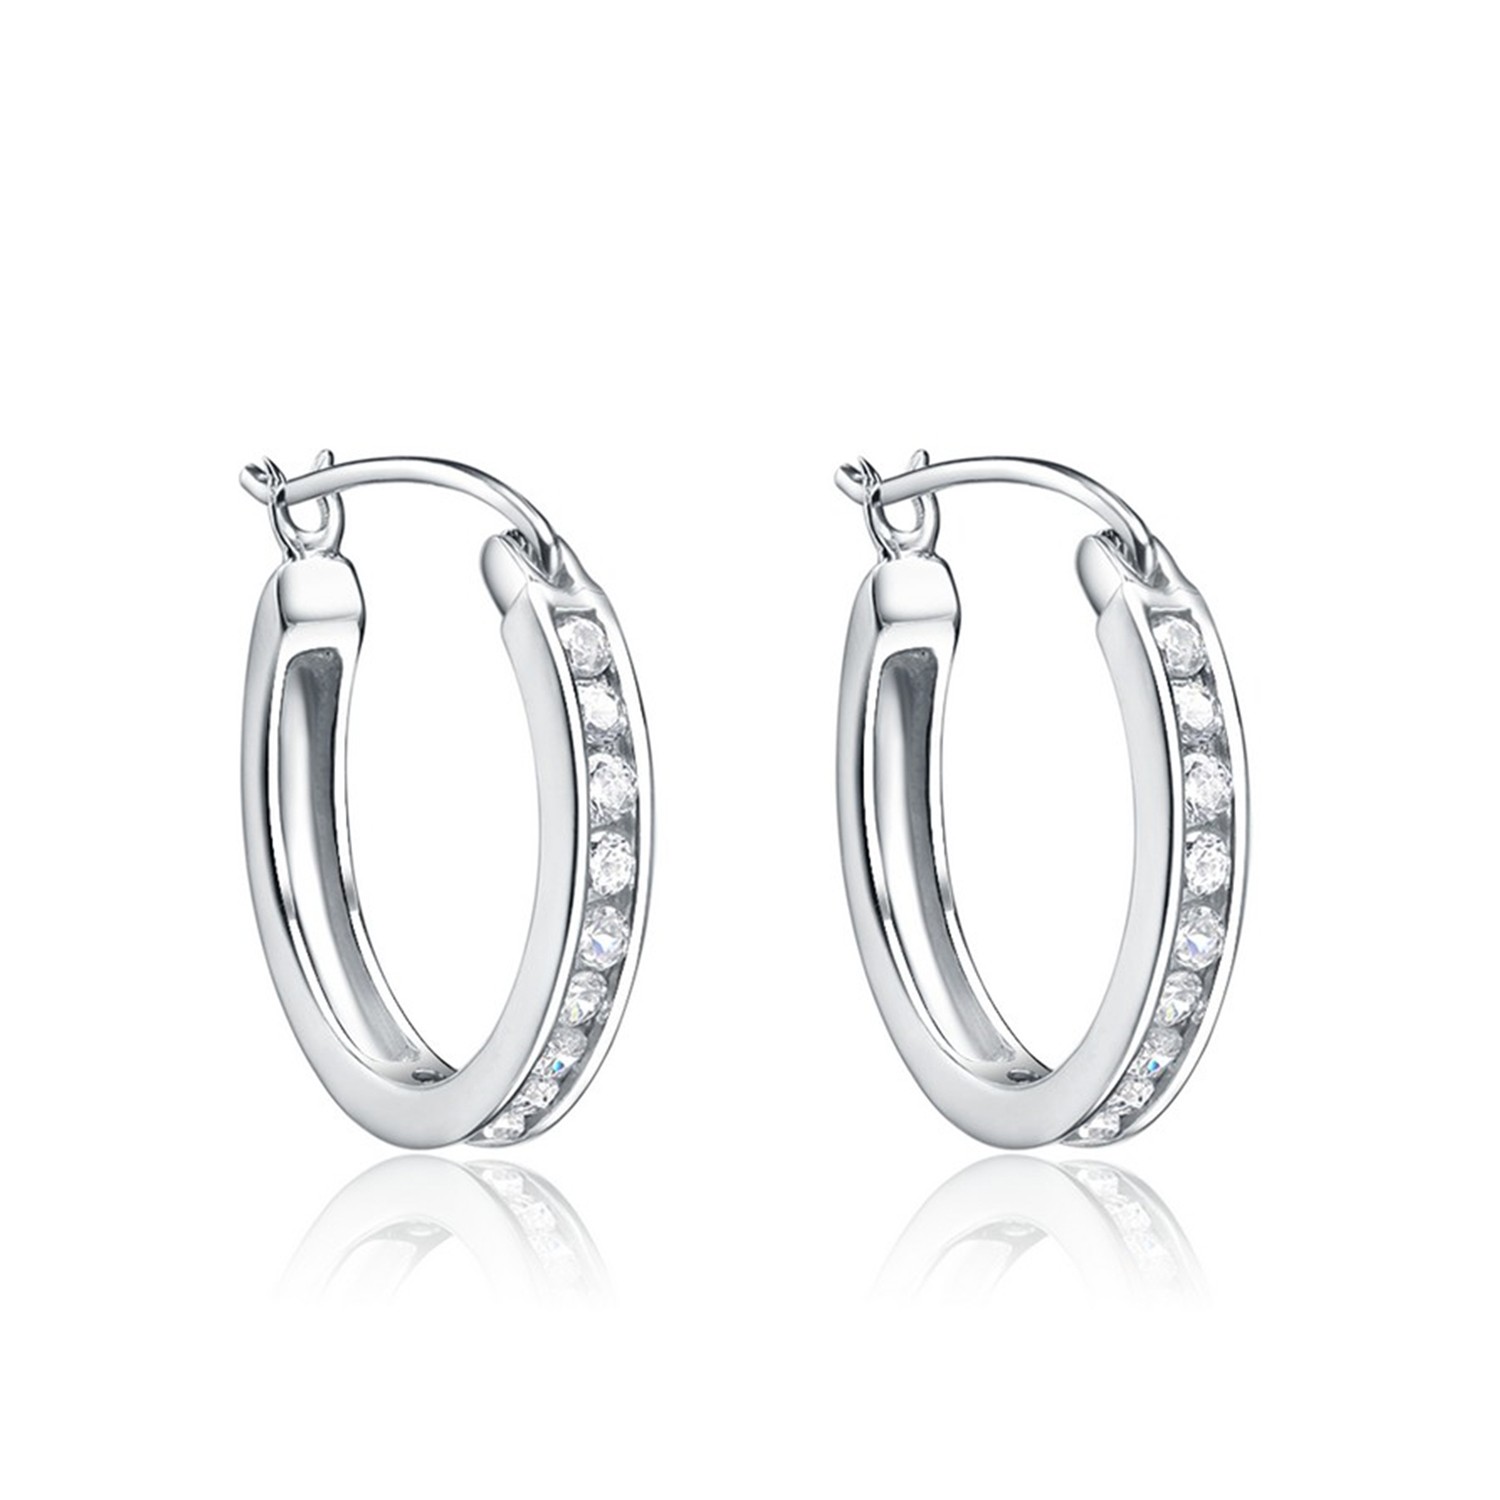 OEM&ODM welcome elegant 925 sterling silver rhodium plated CZ hoop earrings women jewelry gift